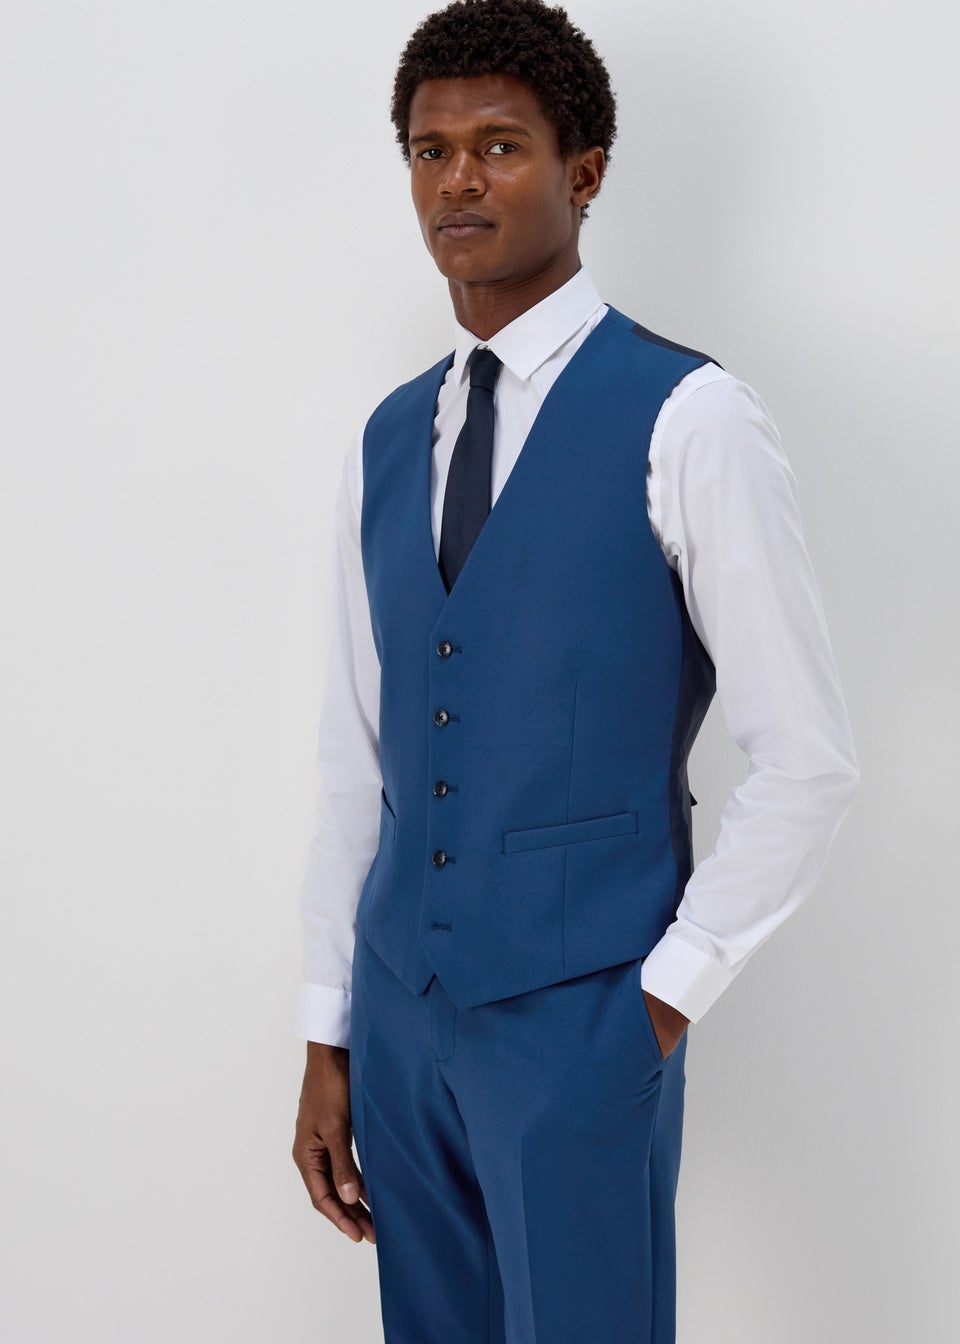 2022 Classic Burgundy Suit Men 2 piece Formal Wedding Suits for Men  Tailored Groom Tuxedo Business Blazer Slim Fit Jacket Pants - ShopMart